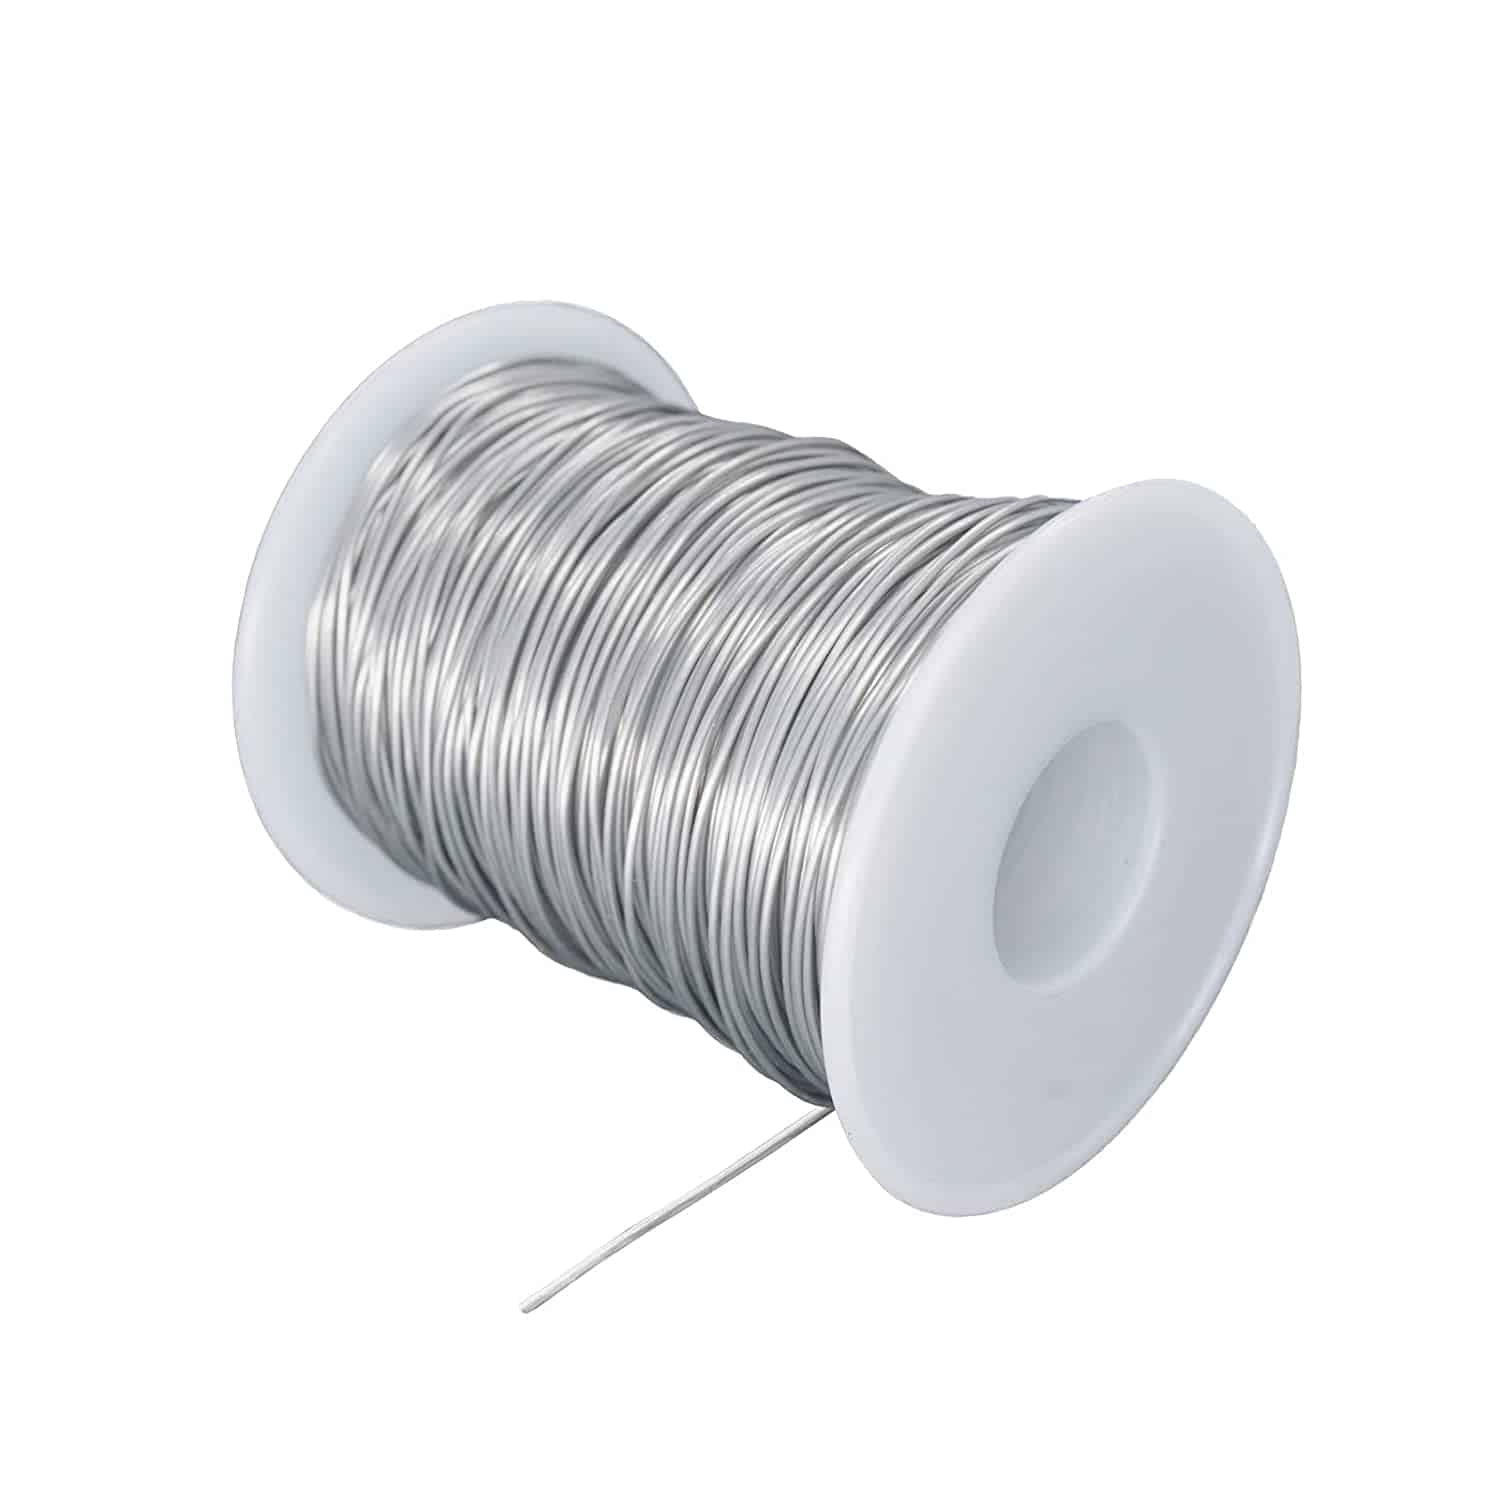 Best steel wire & best thin wire for details- 20 Gauge (0.8mm) 304 Stainless Steel Wire 